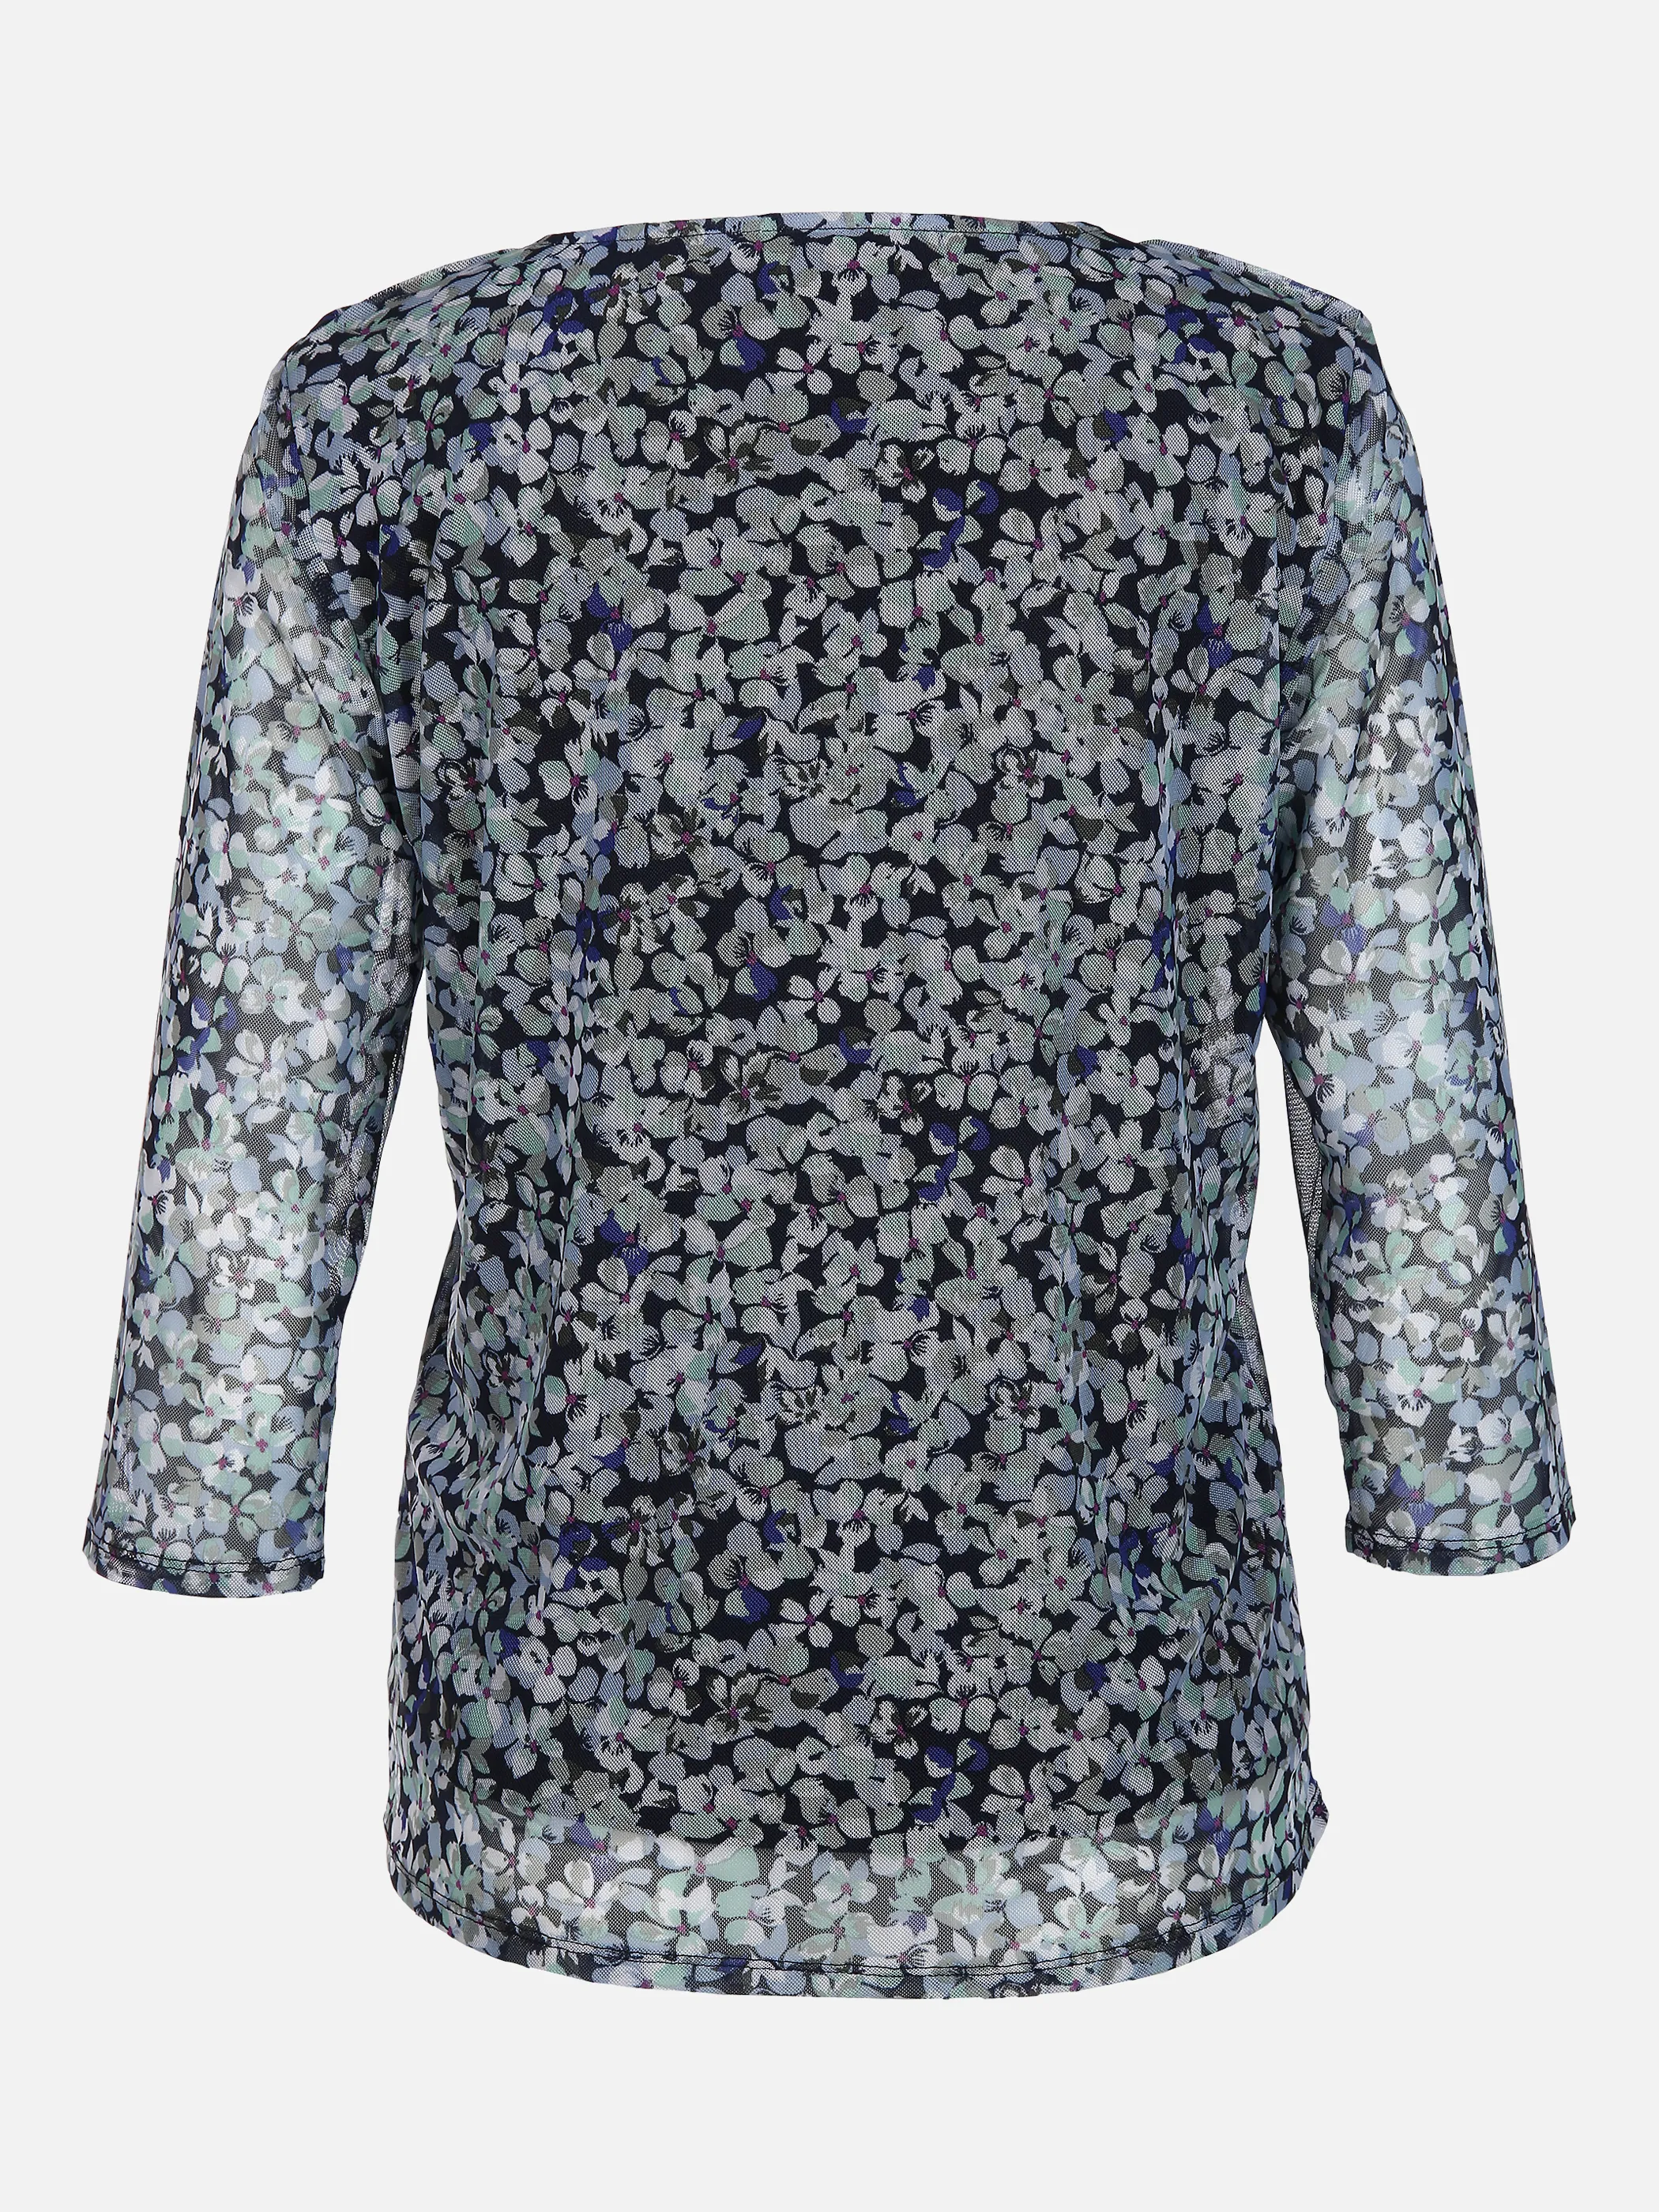 Tom Tailor 1025280 T-shirt mesh blouse Blau 850255 27263 2